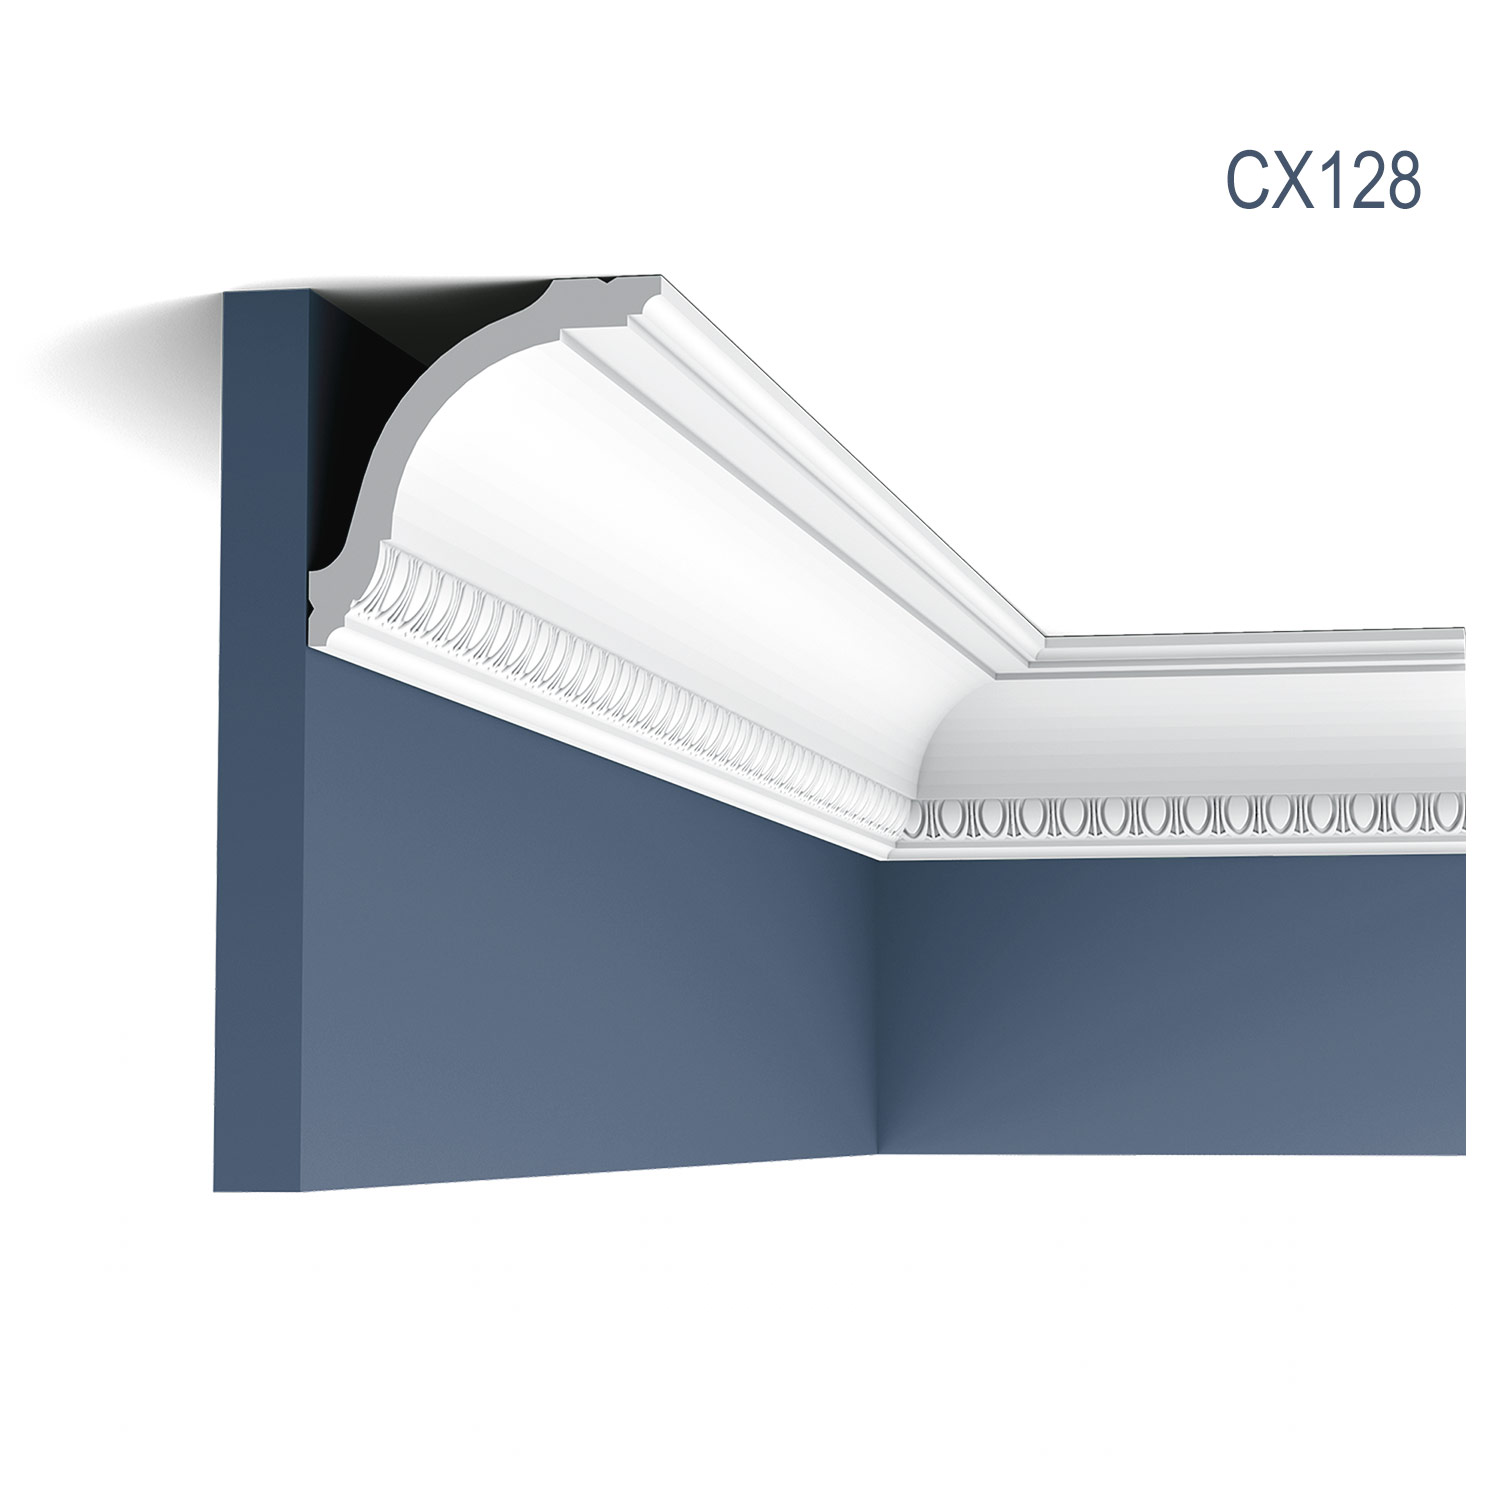 Cornisa Axxent CX128, Dimensiuni: 200 X 9.4 X 9.4 cm, Orac Decor